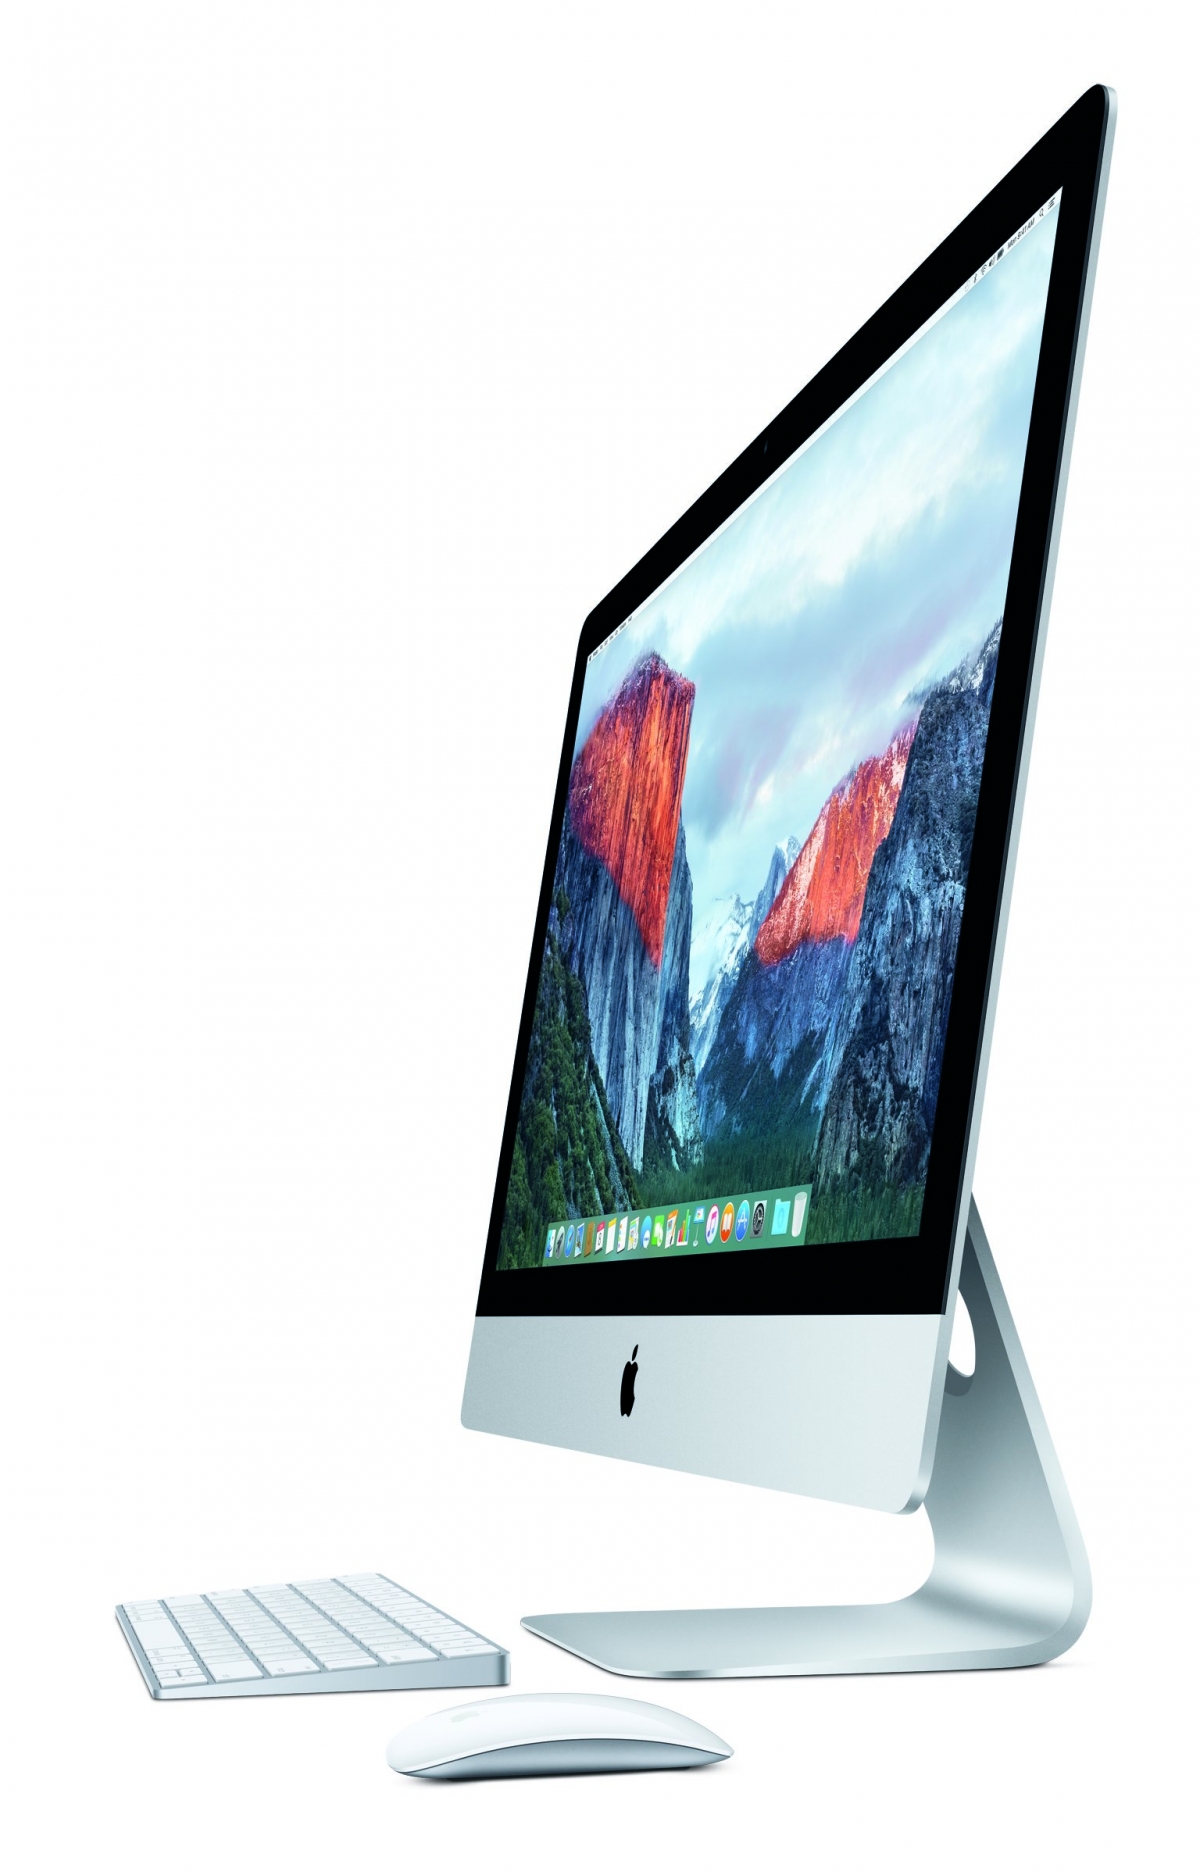 Apple unveils new 21.5in iMac with 4K Retina display | IBTimes UK